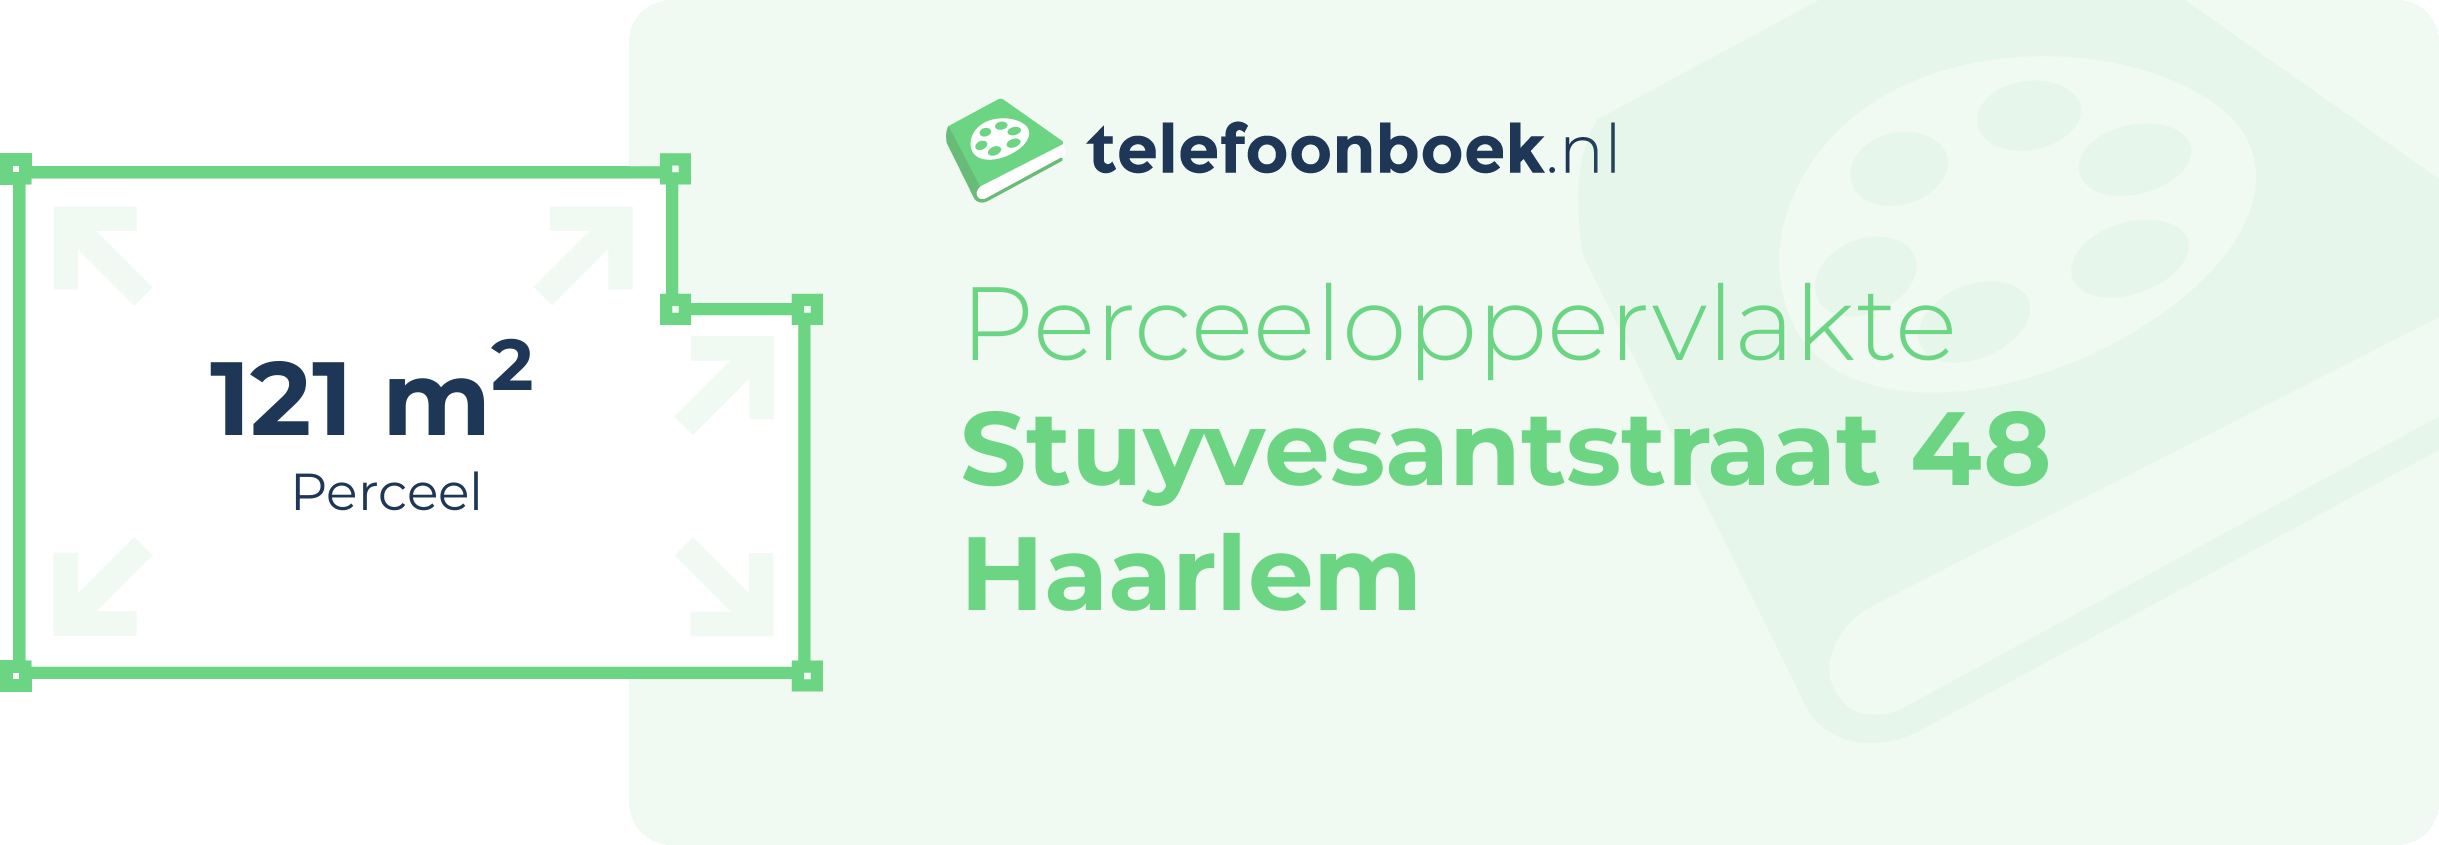 Perceeloppervlakte Stuyvesantstraat 48 Haarlem